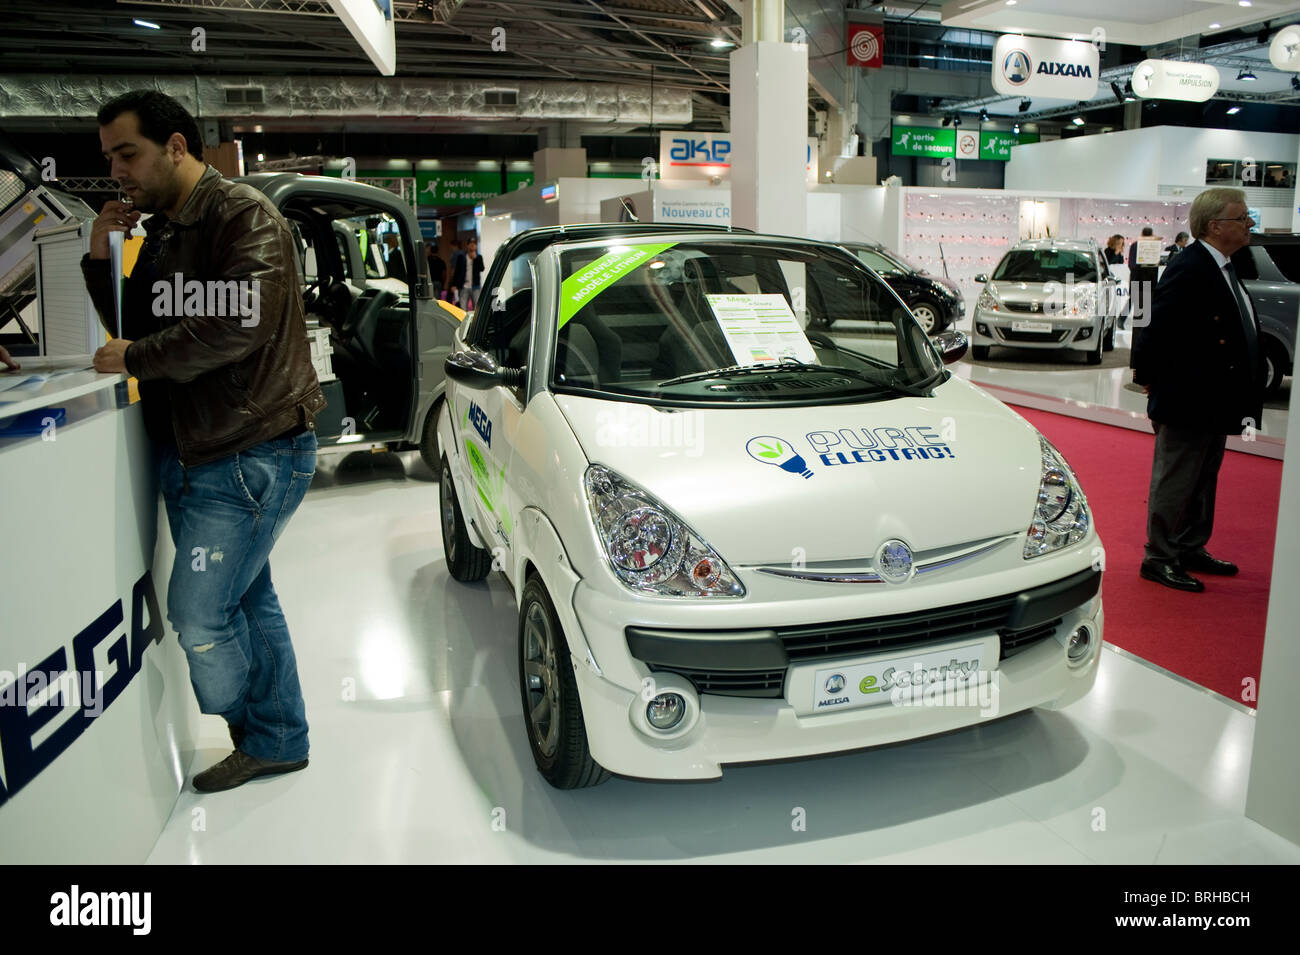 https://c8.alamy.com/comp/BRHBCH/paris-france-paris-car-show-small-electric-cars-mega-corp-front-green-BRHBCH.jpg